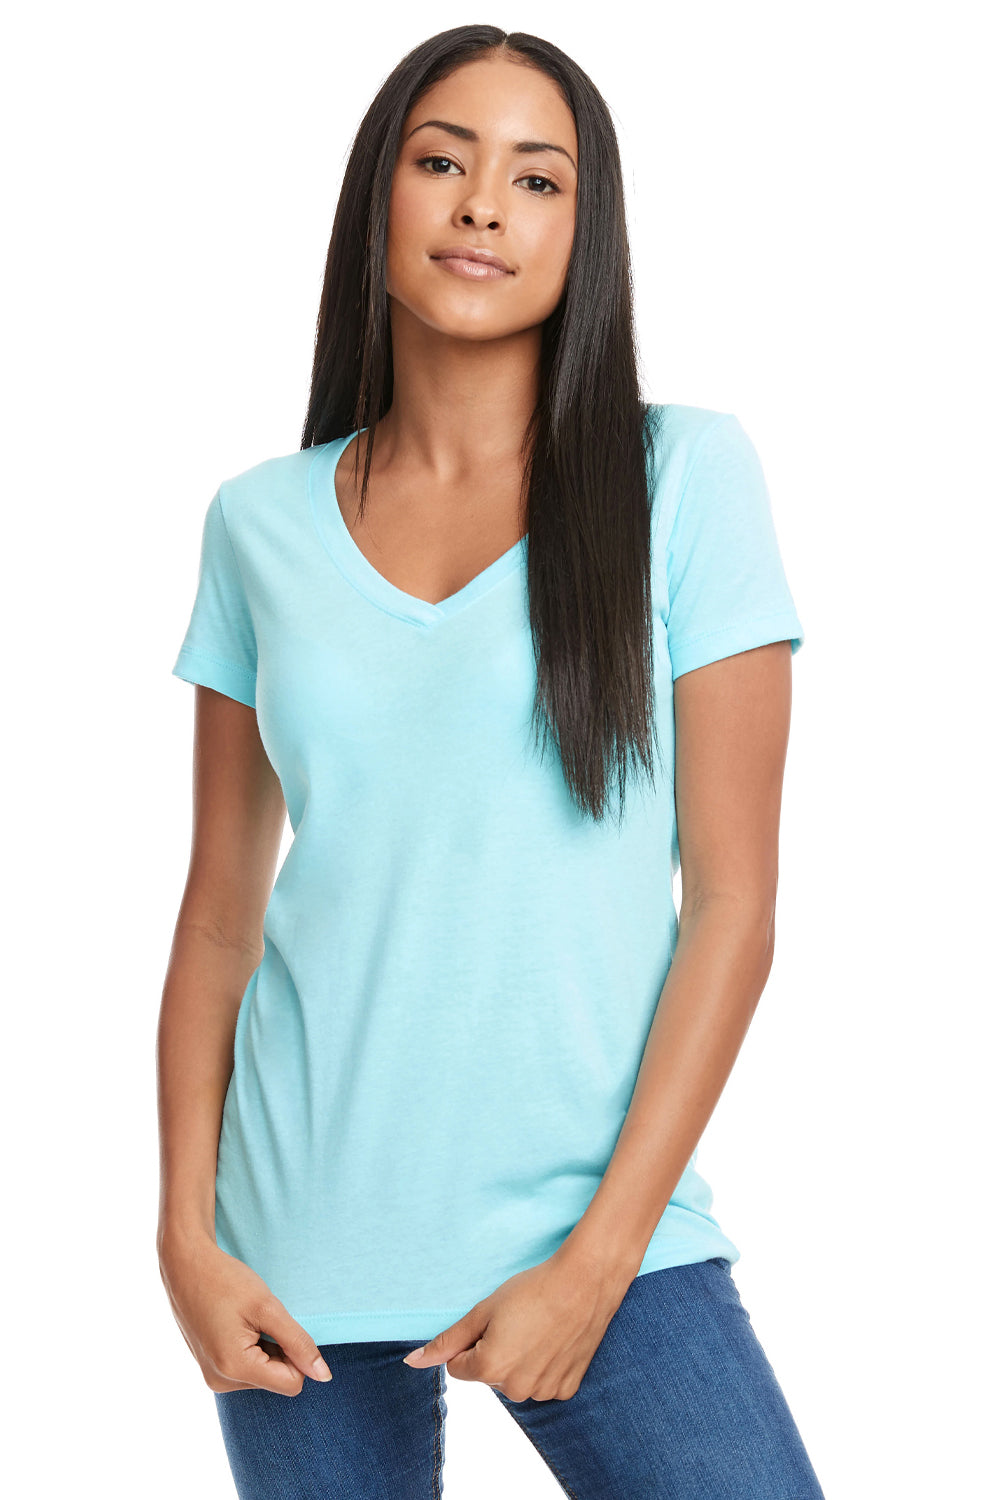 Next Level N1540 Womens Ideal Jersey Short Sleeve V-Neck T-Shirt Cancun Blue Front